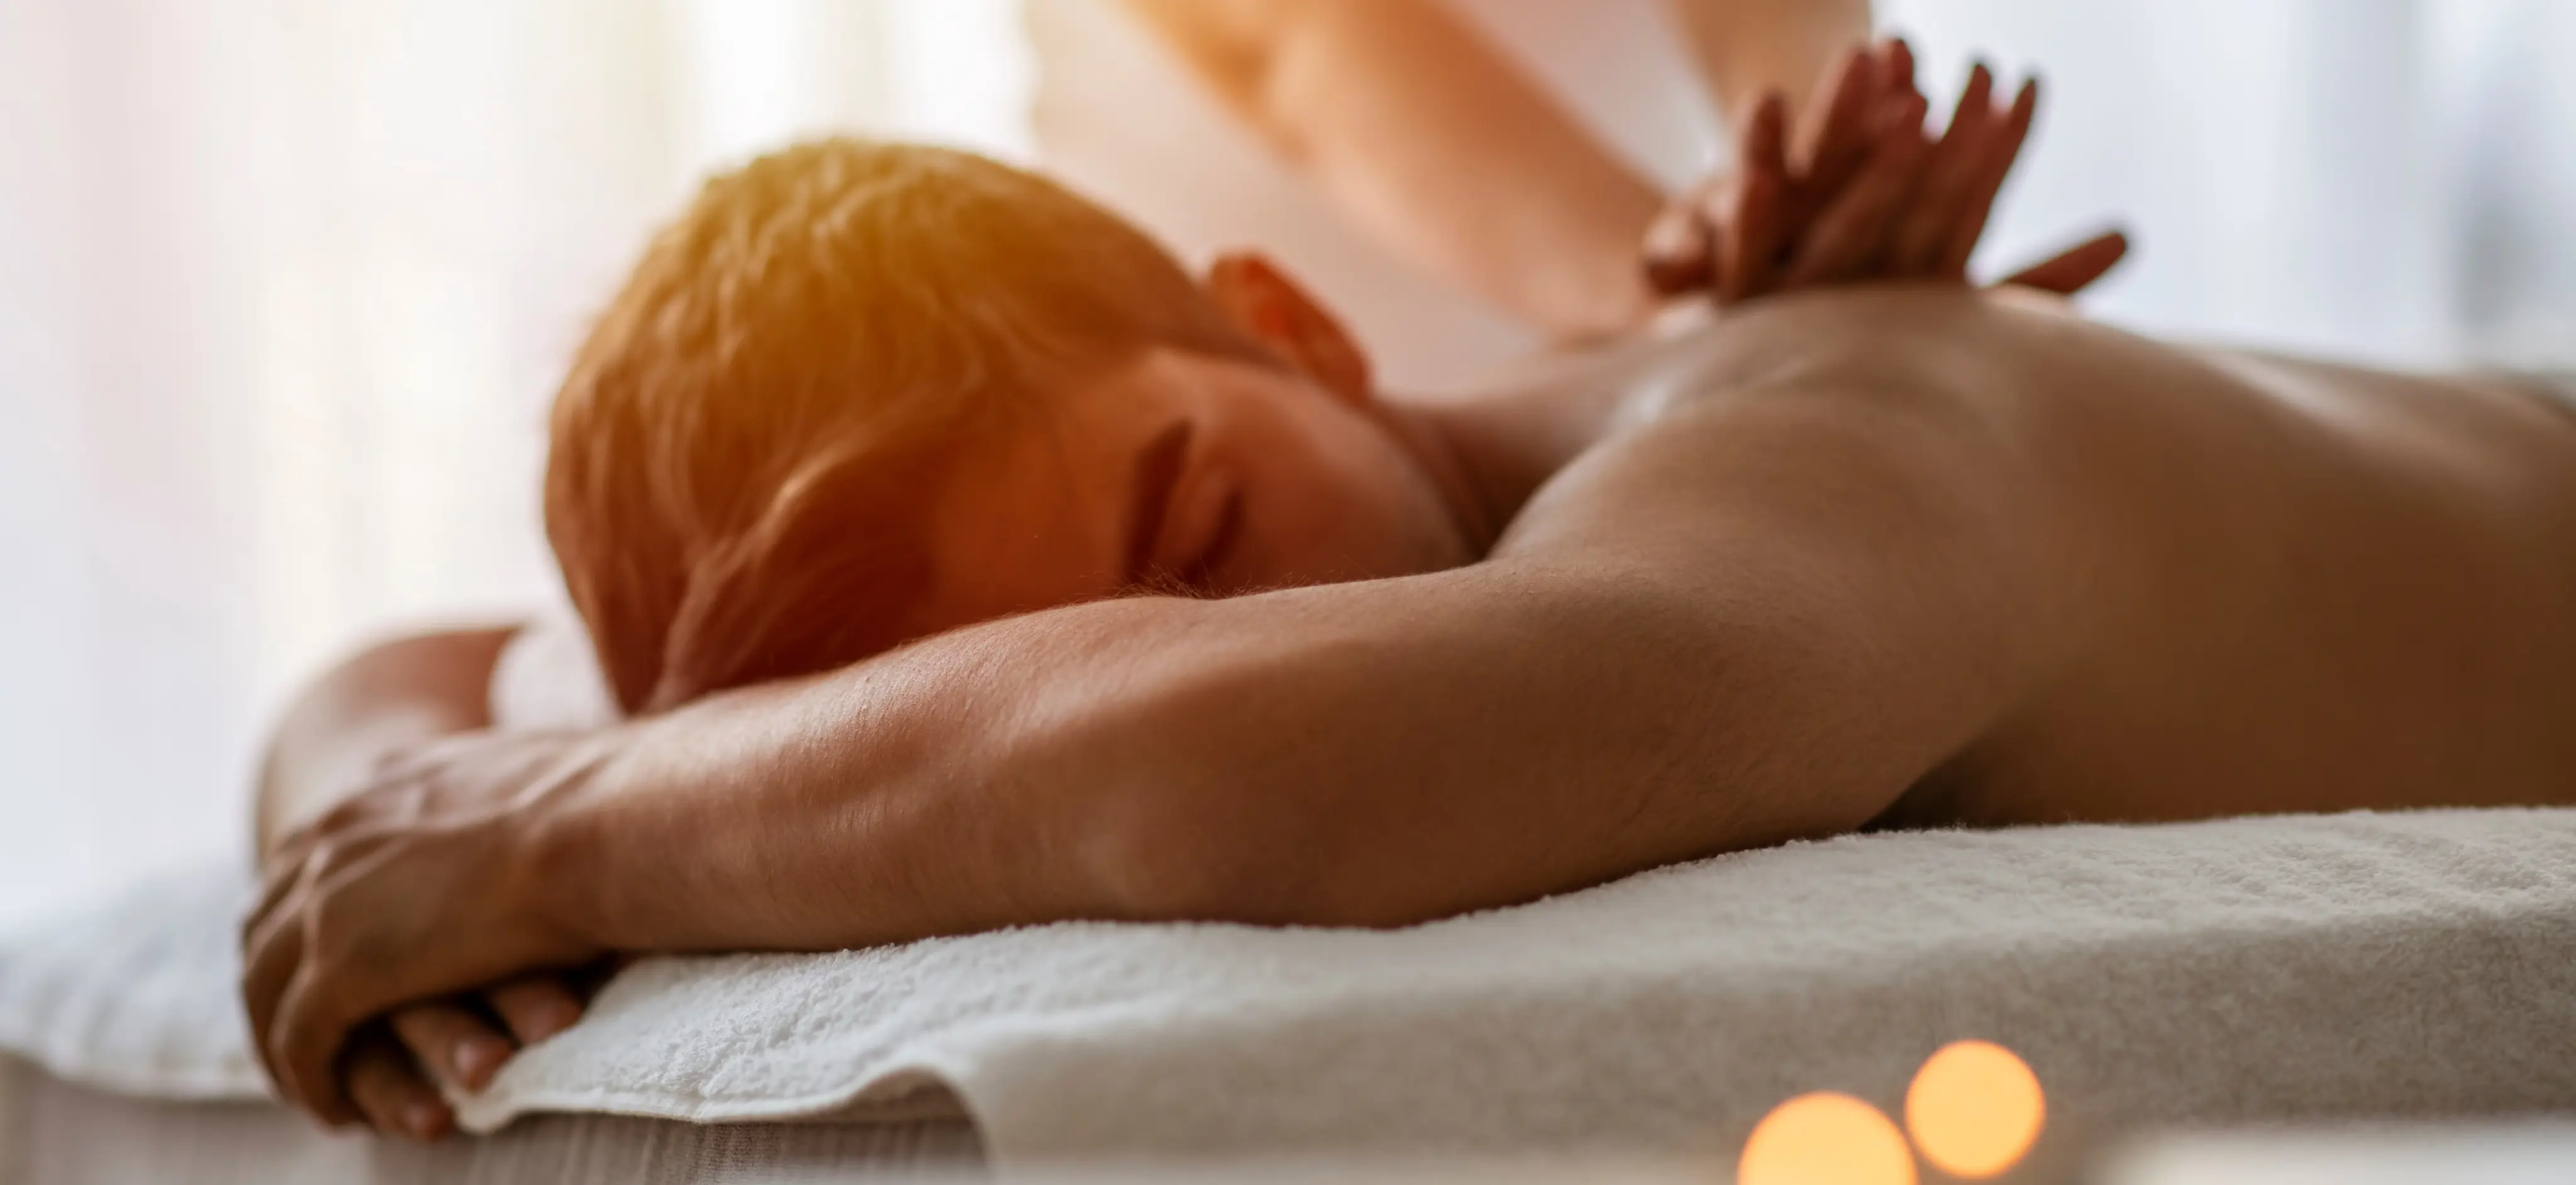 Deep Tissue Massage Benefits & Risks - Hawaii Natural Therapy